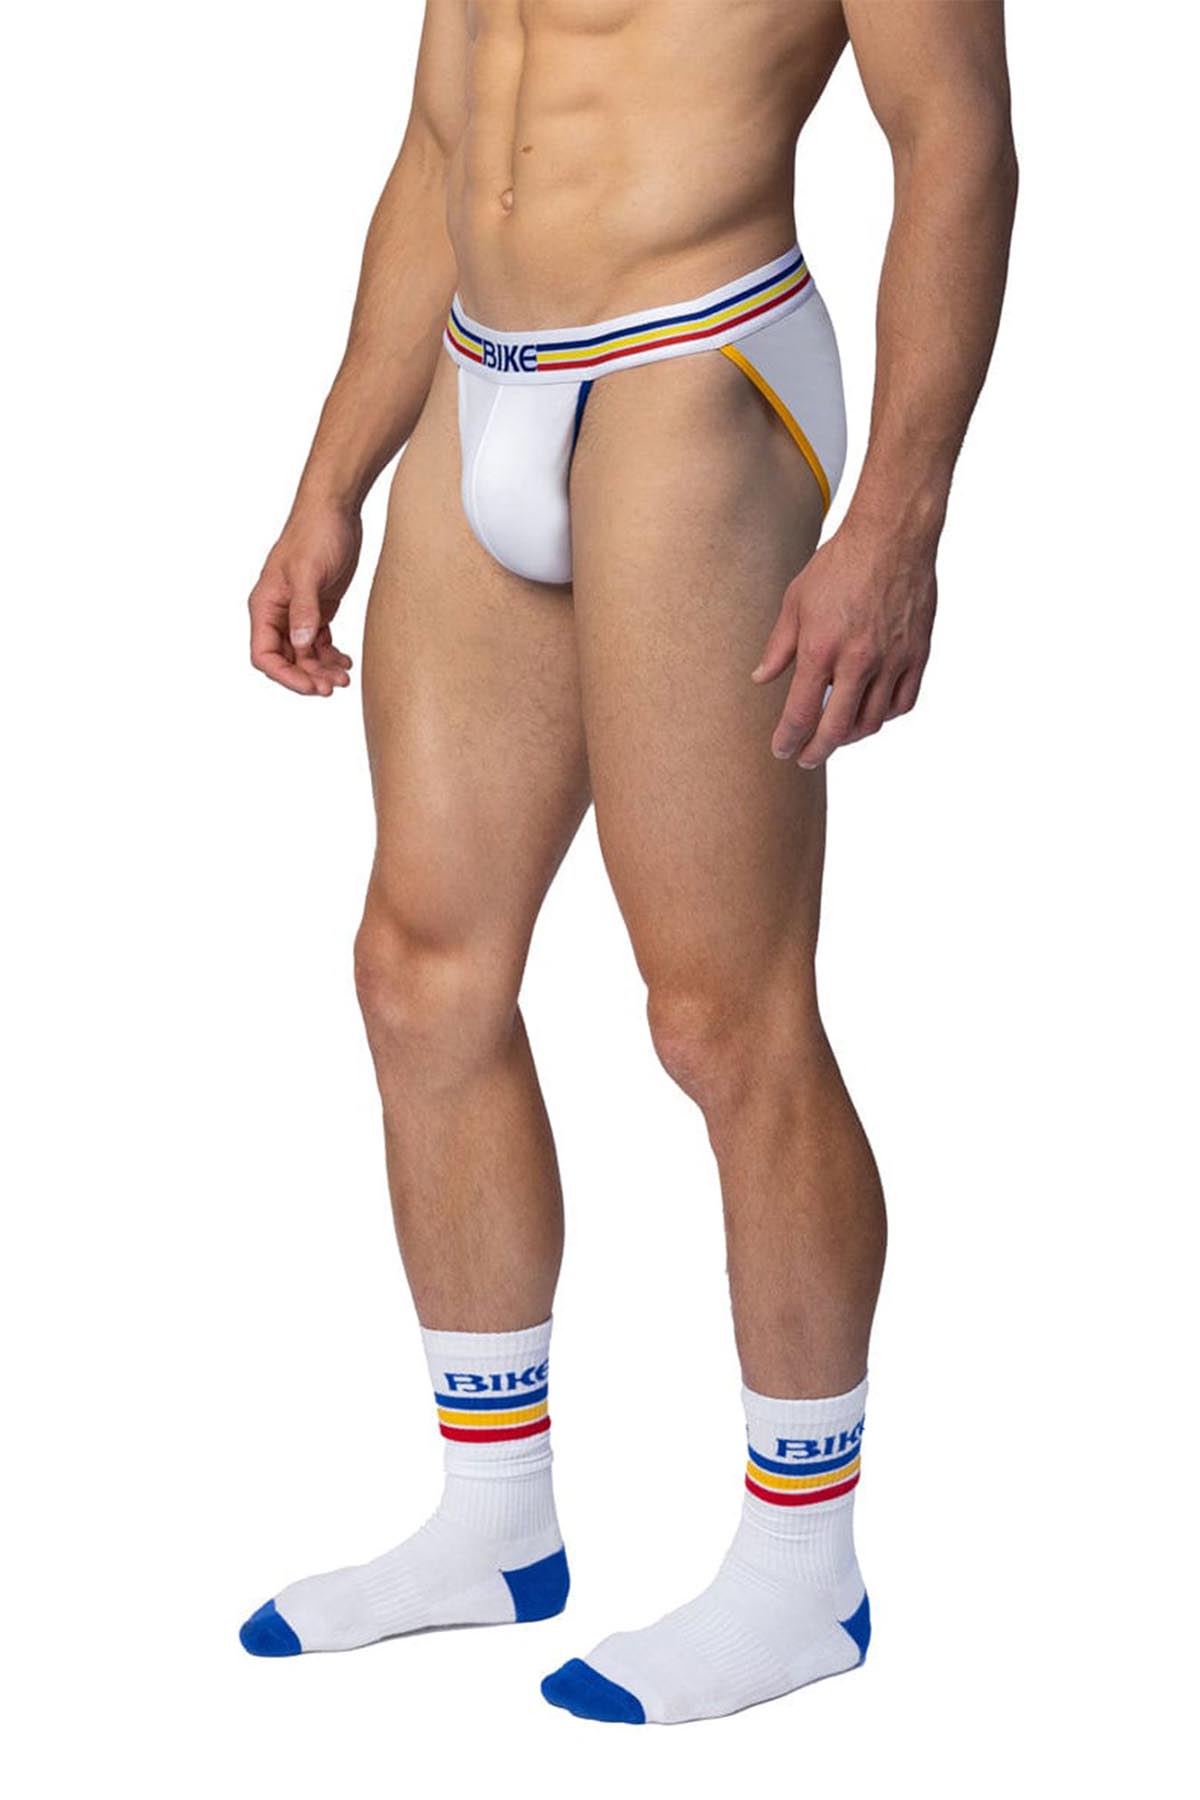 Bike Athletic Men's Jock Brief Underwear 2-Pack White/Royal BAS312WHR at  International Jock